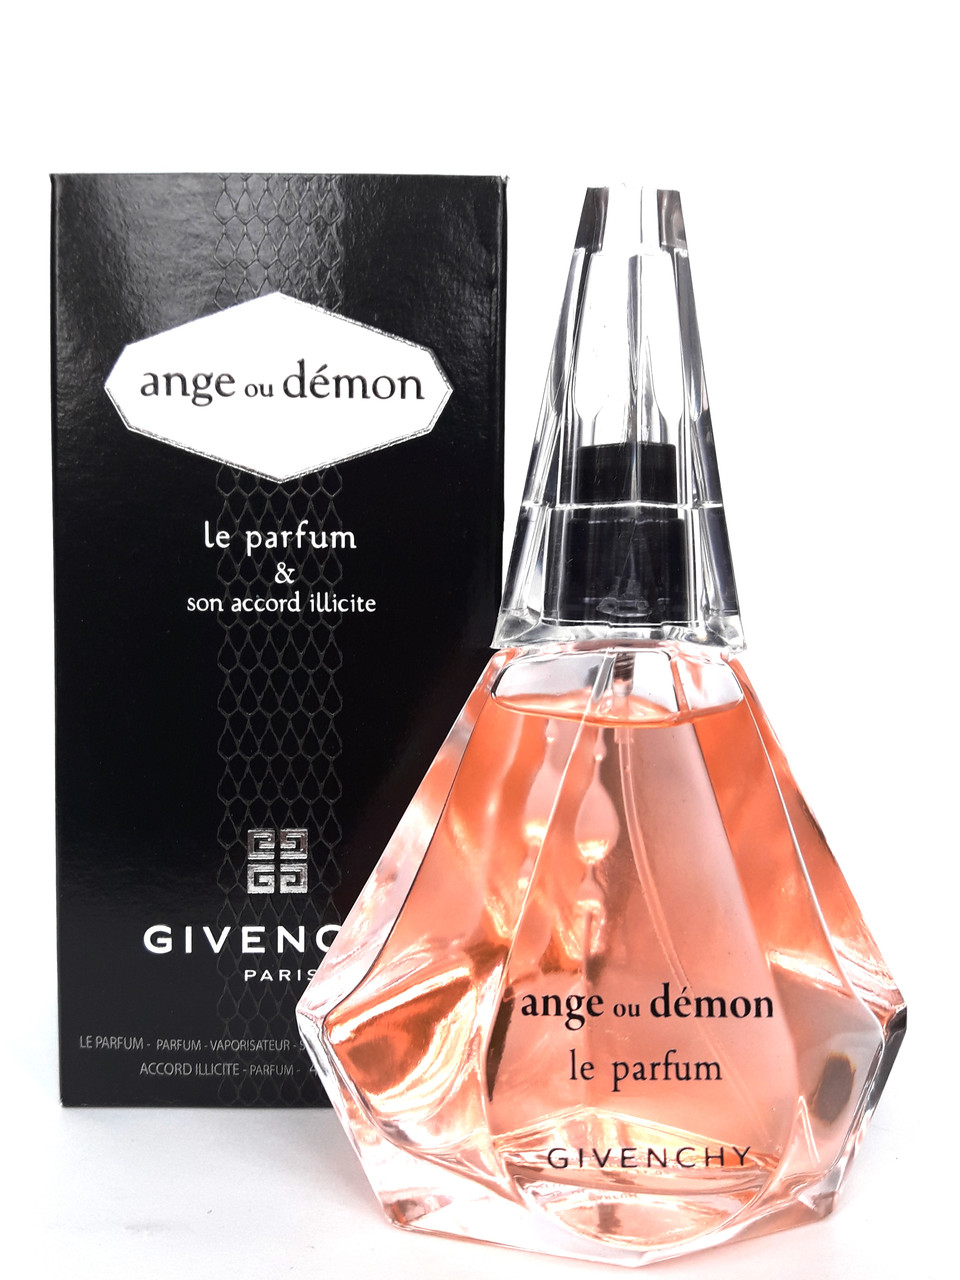 Givenchy Ange Ou Demon Le Parfum & Accord Illicite Perfume